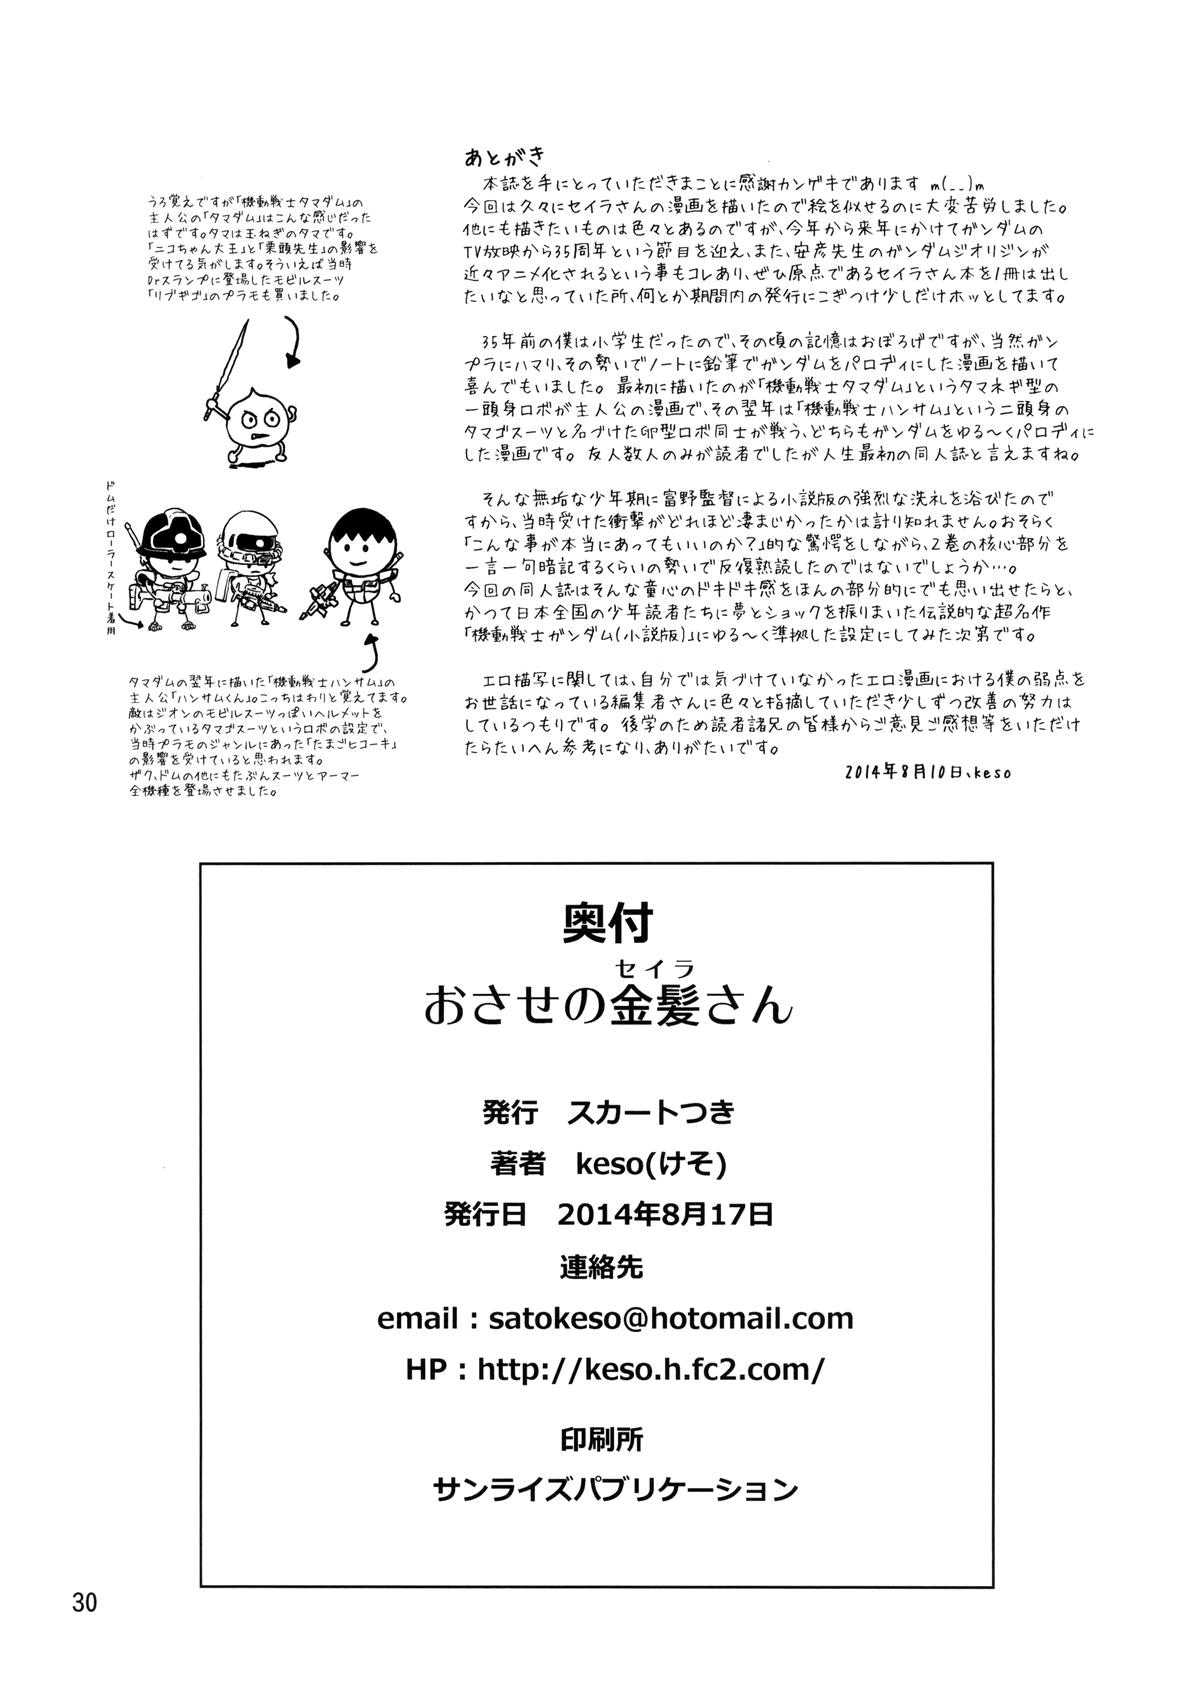 Van Osase no Sayla-san - Mobile suit gundam | kidou senshi gundam Movie - Page 29